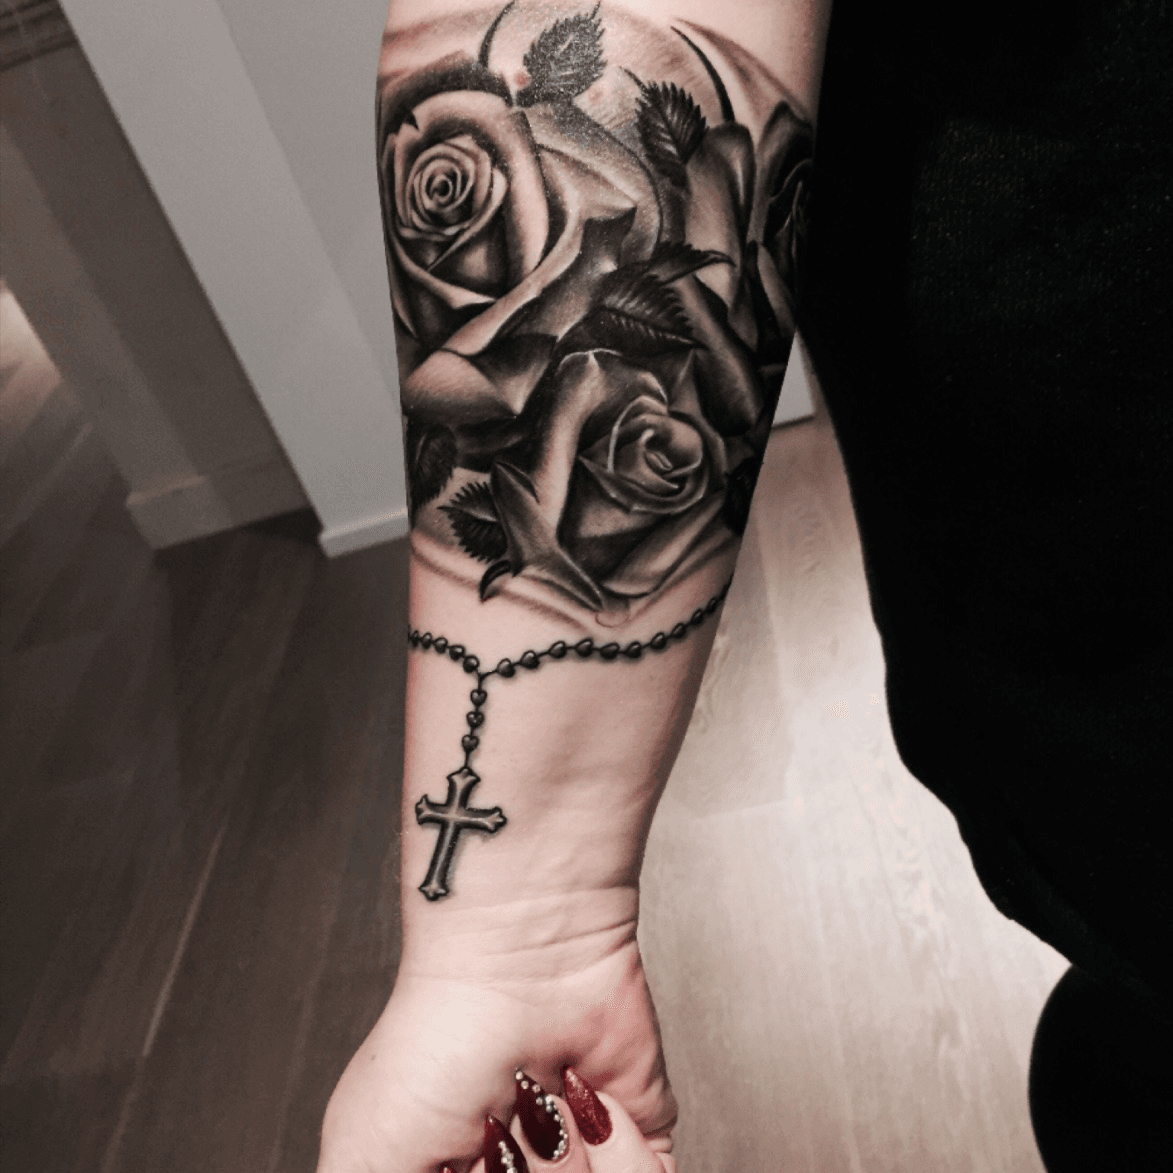 rosary around hand tattoo with roseTikTok Search